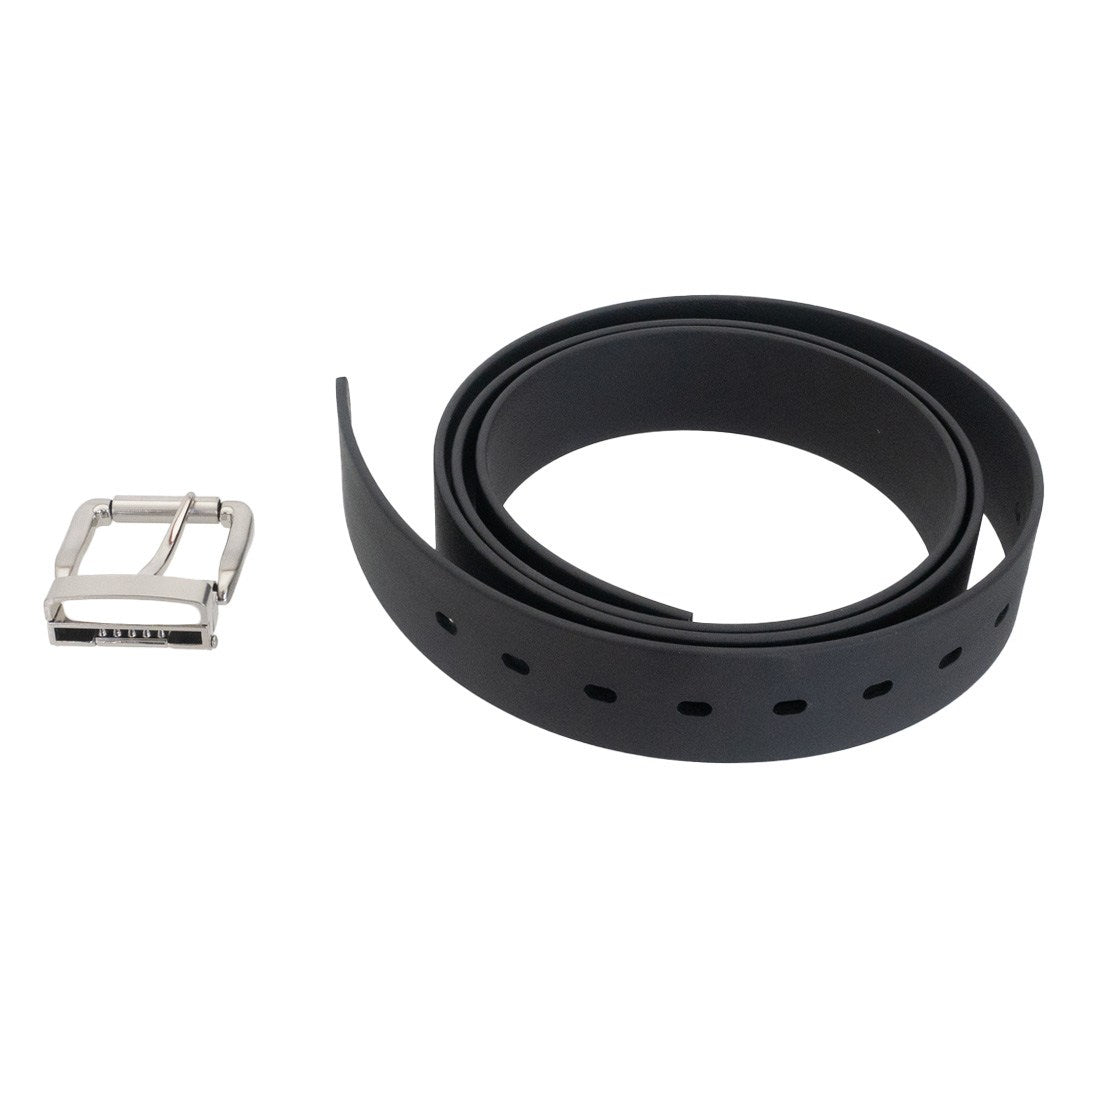 World Enterprises Standard Belt - 1.5 Inch Belt and Buckle View